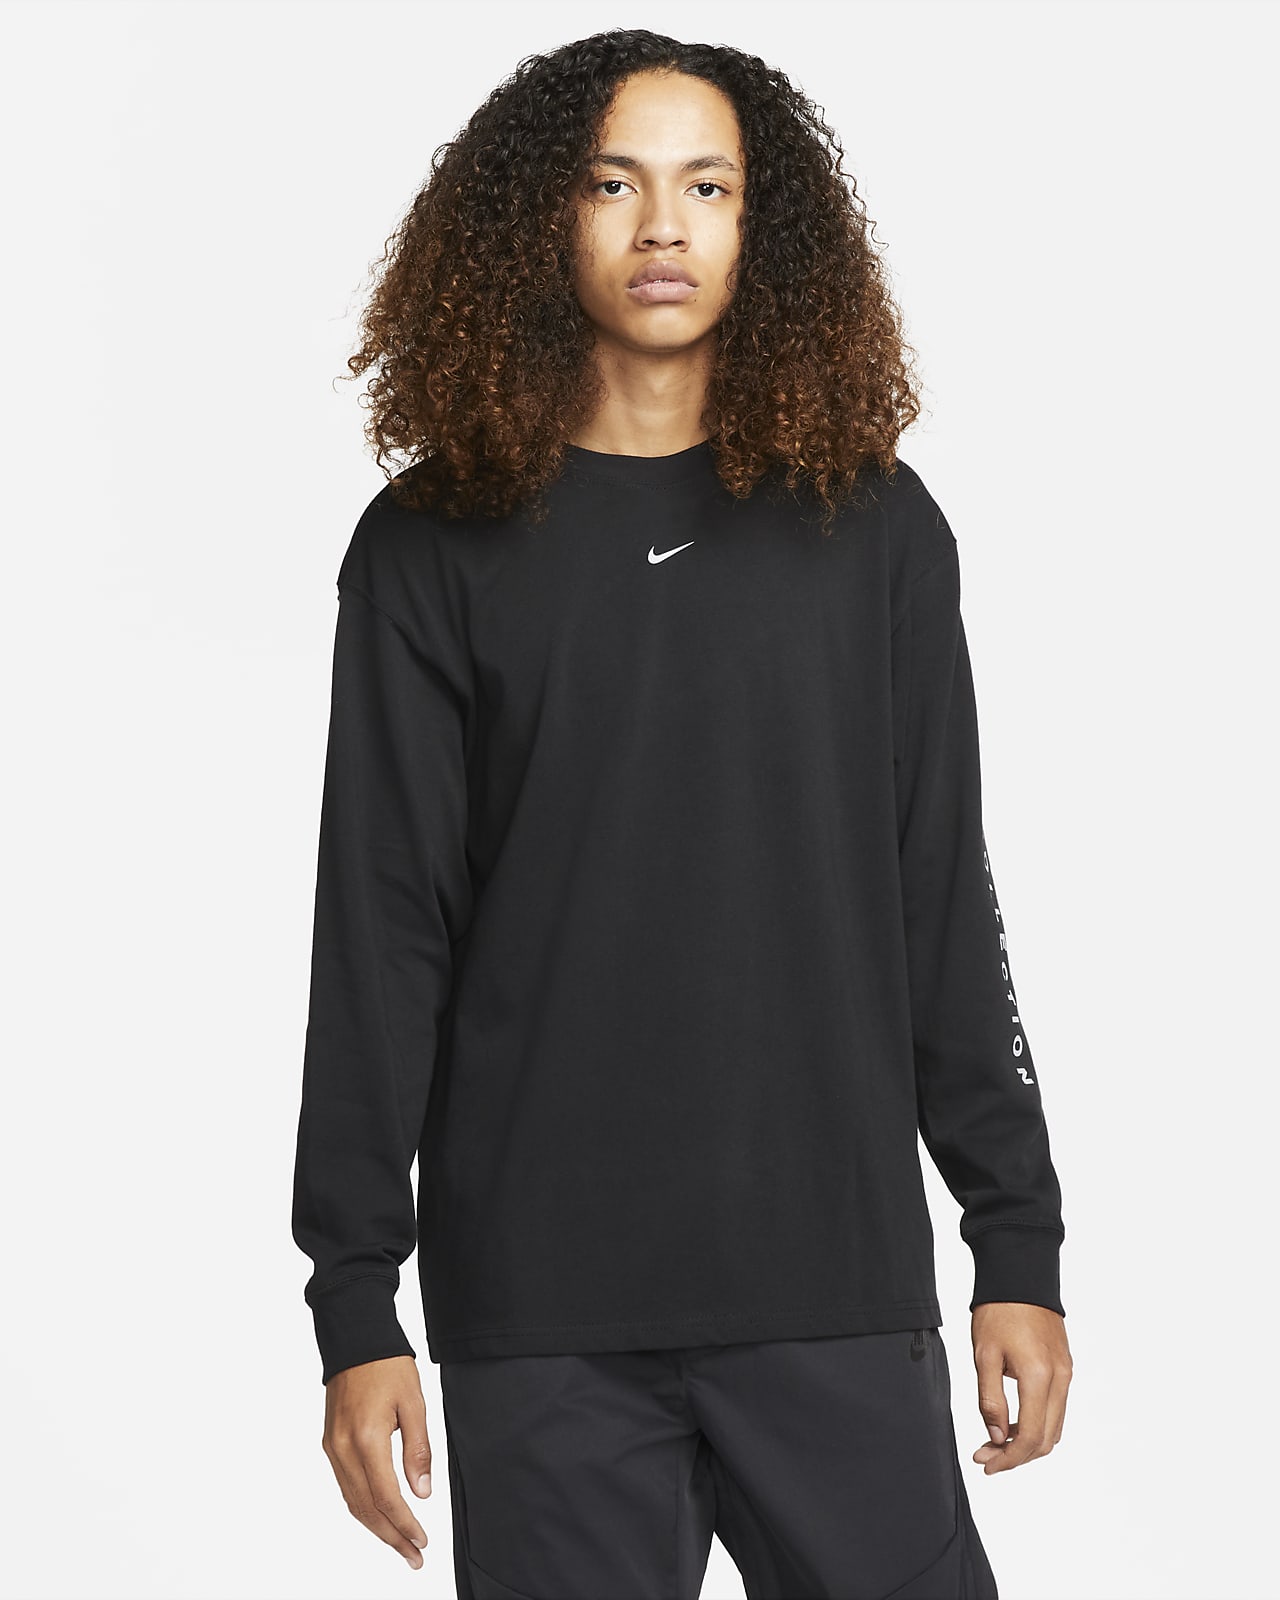 Naomi Osaka Long-Sleeve T-Shirt. Nike AE